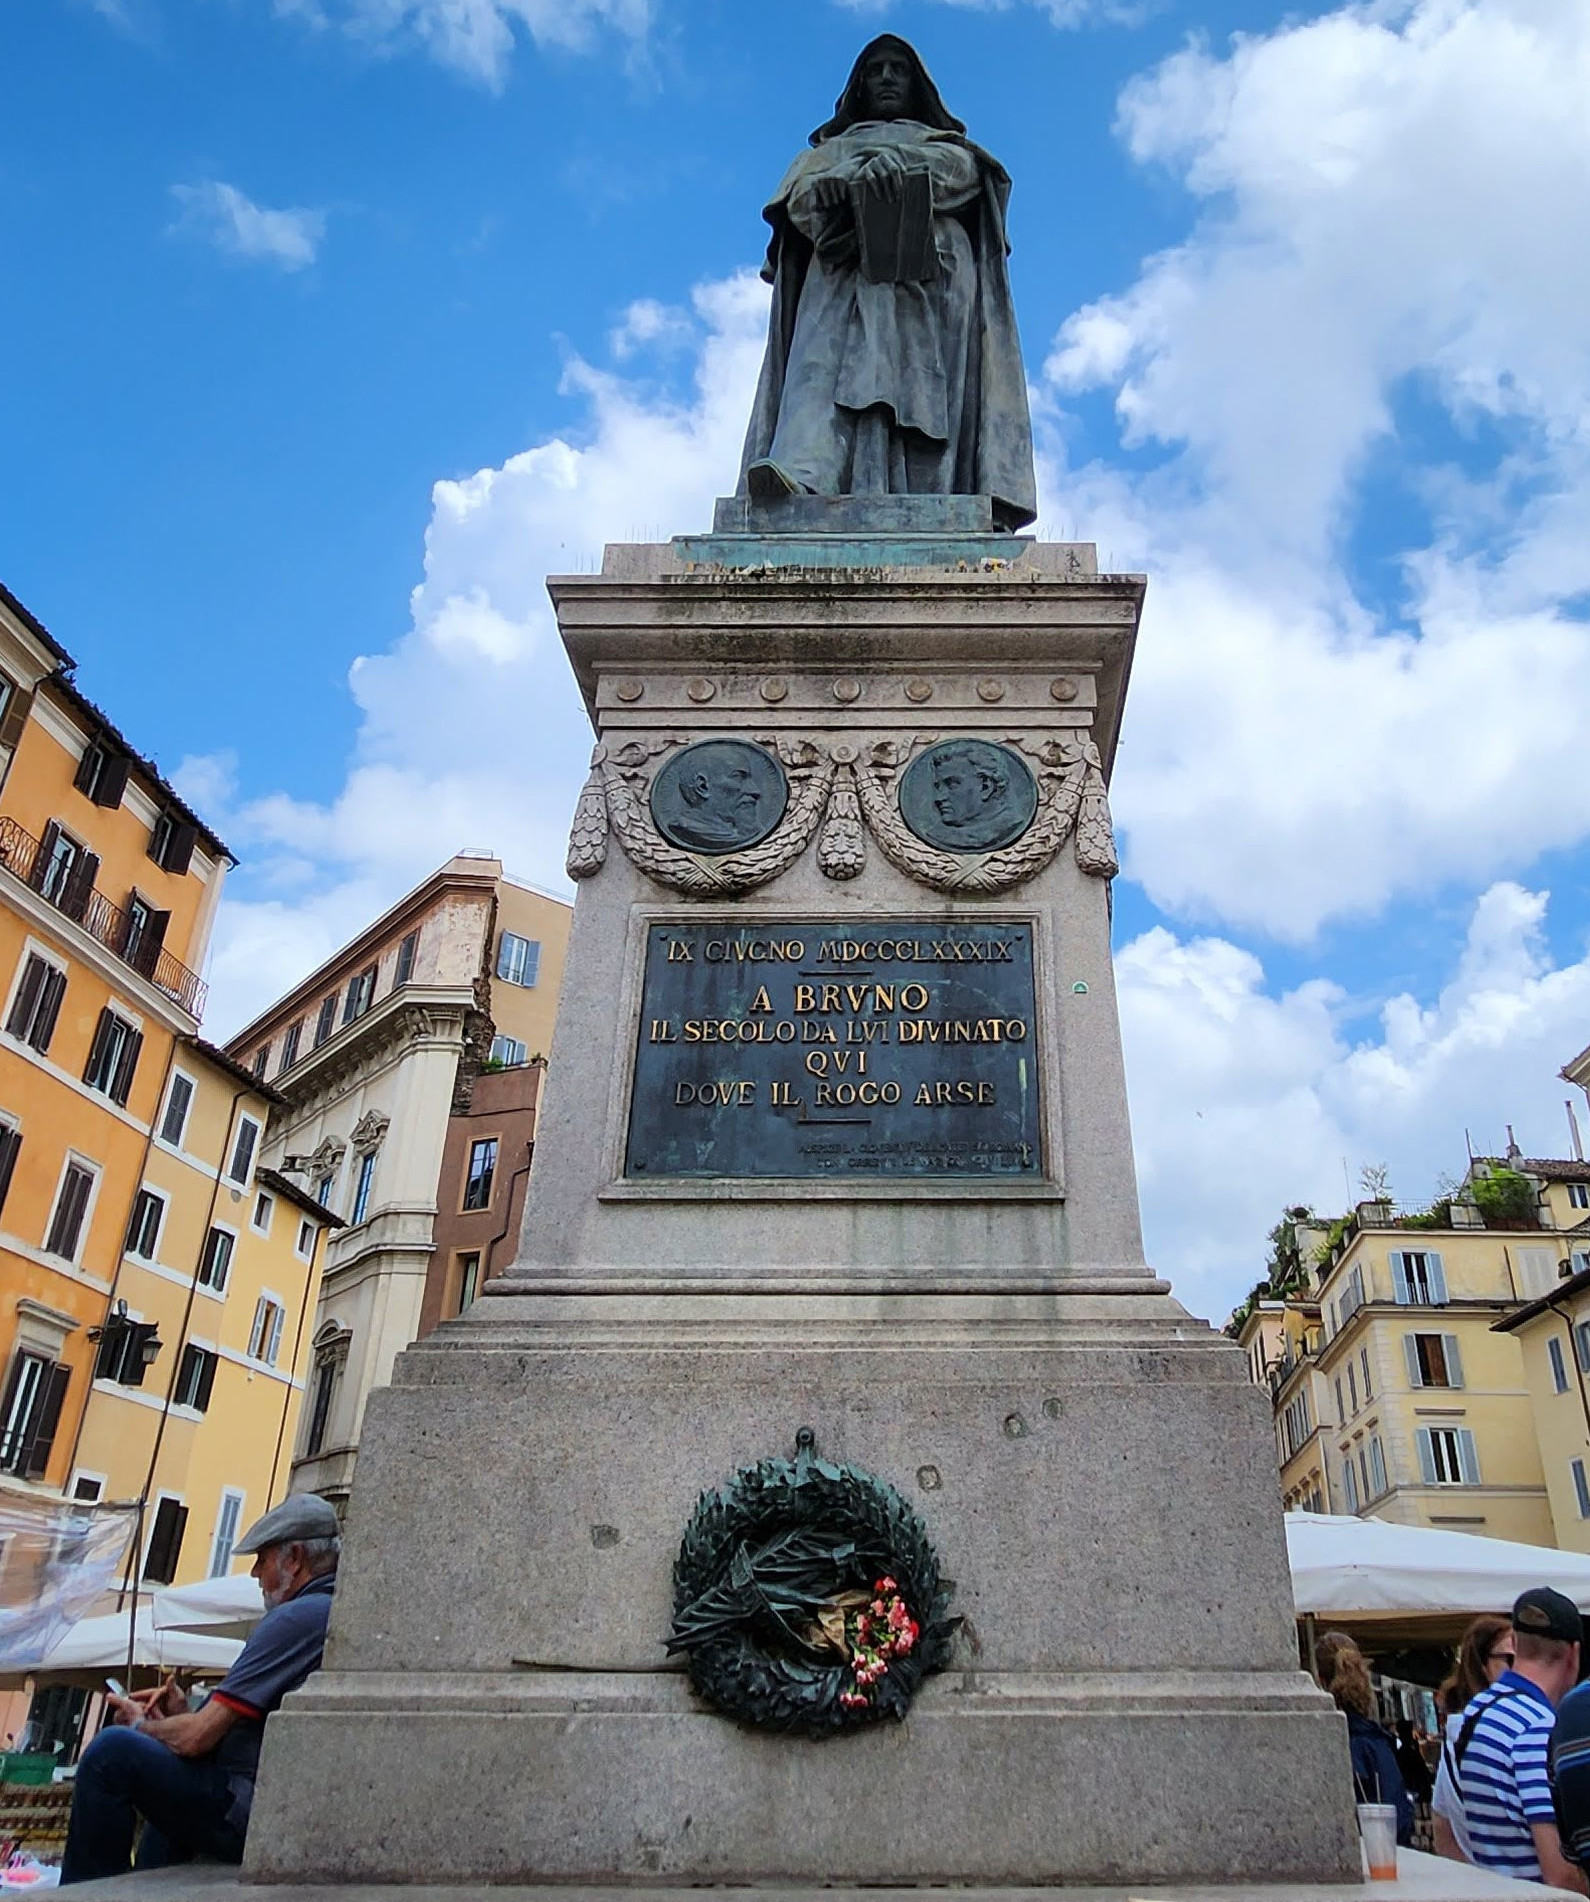 Giordano Bruno Statue, in Rome where he was killed